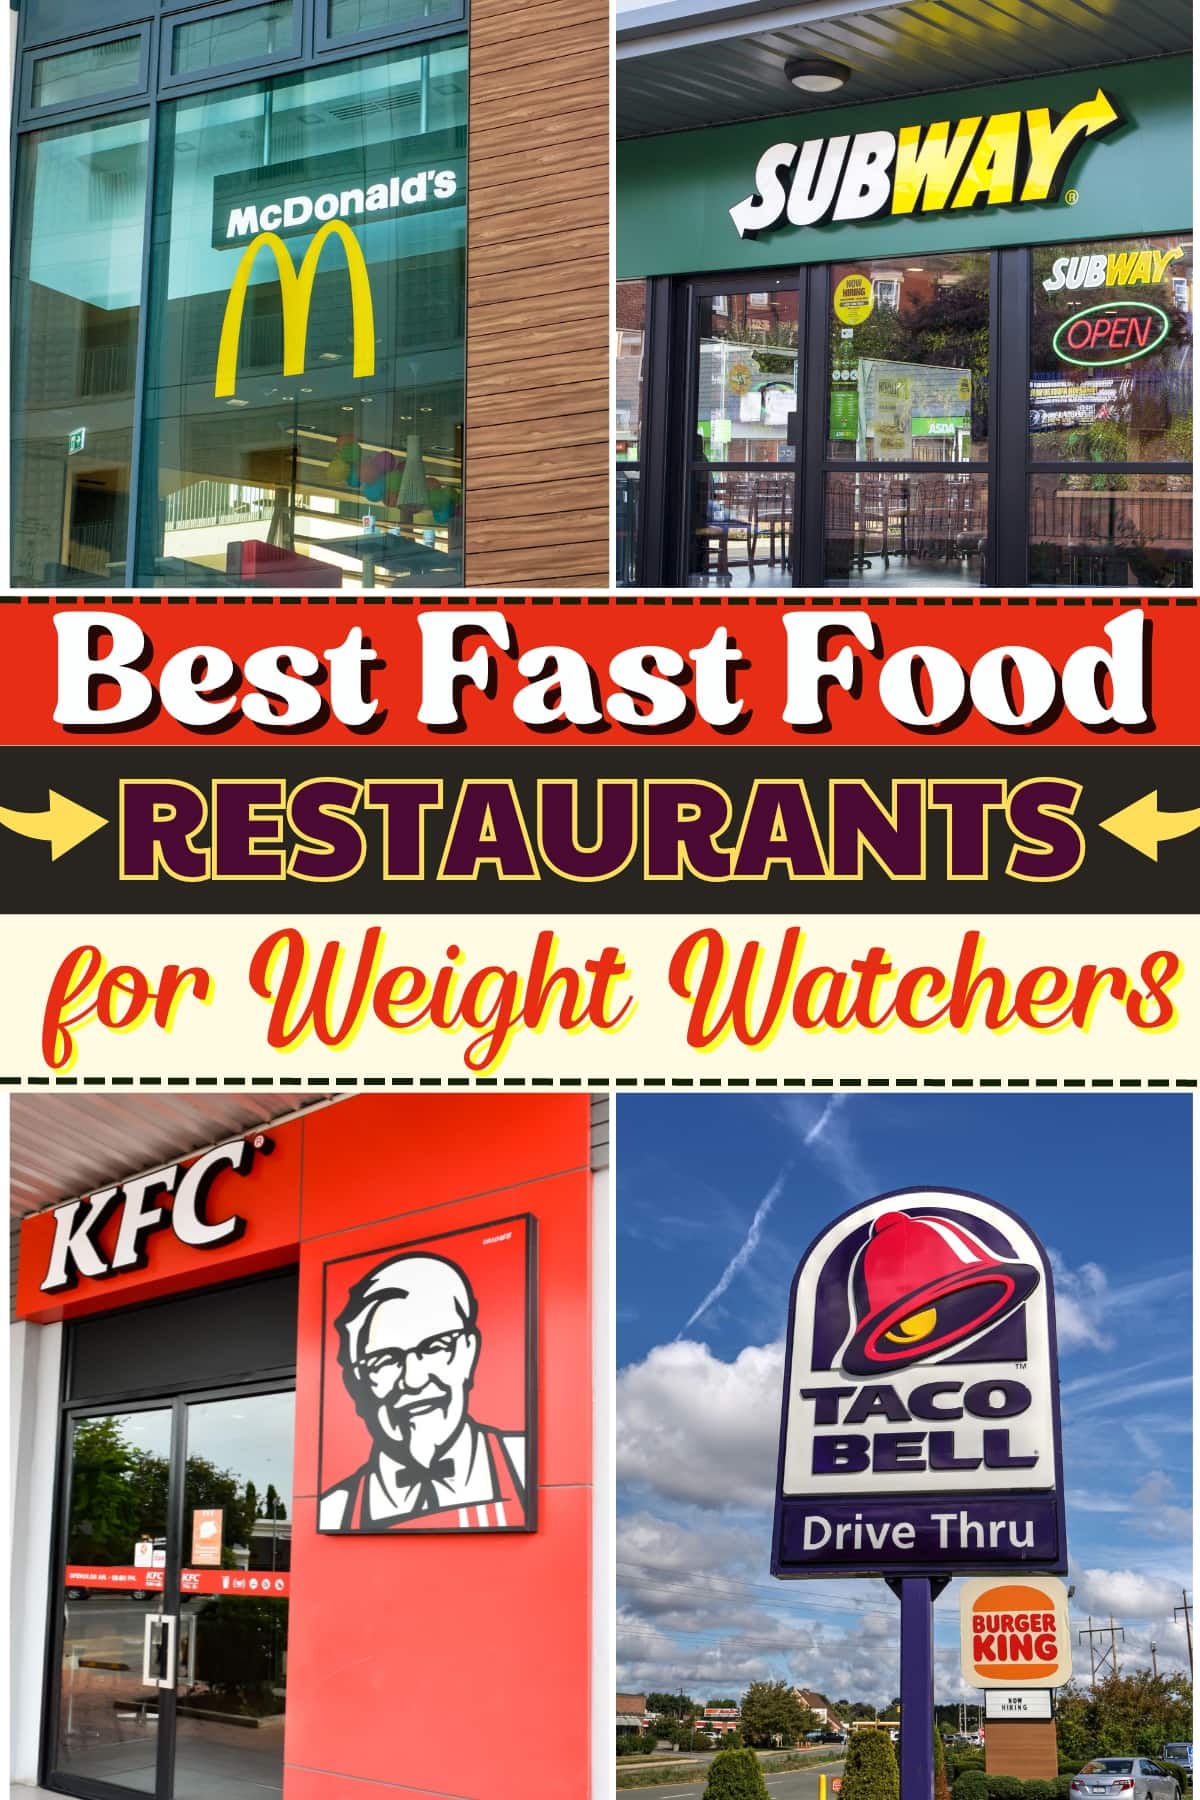 Best Fast Food Restaurants for Weight Watchers